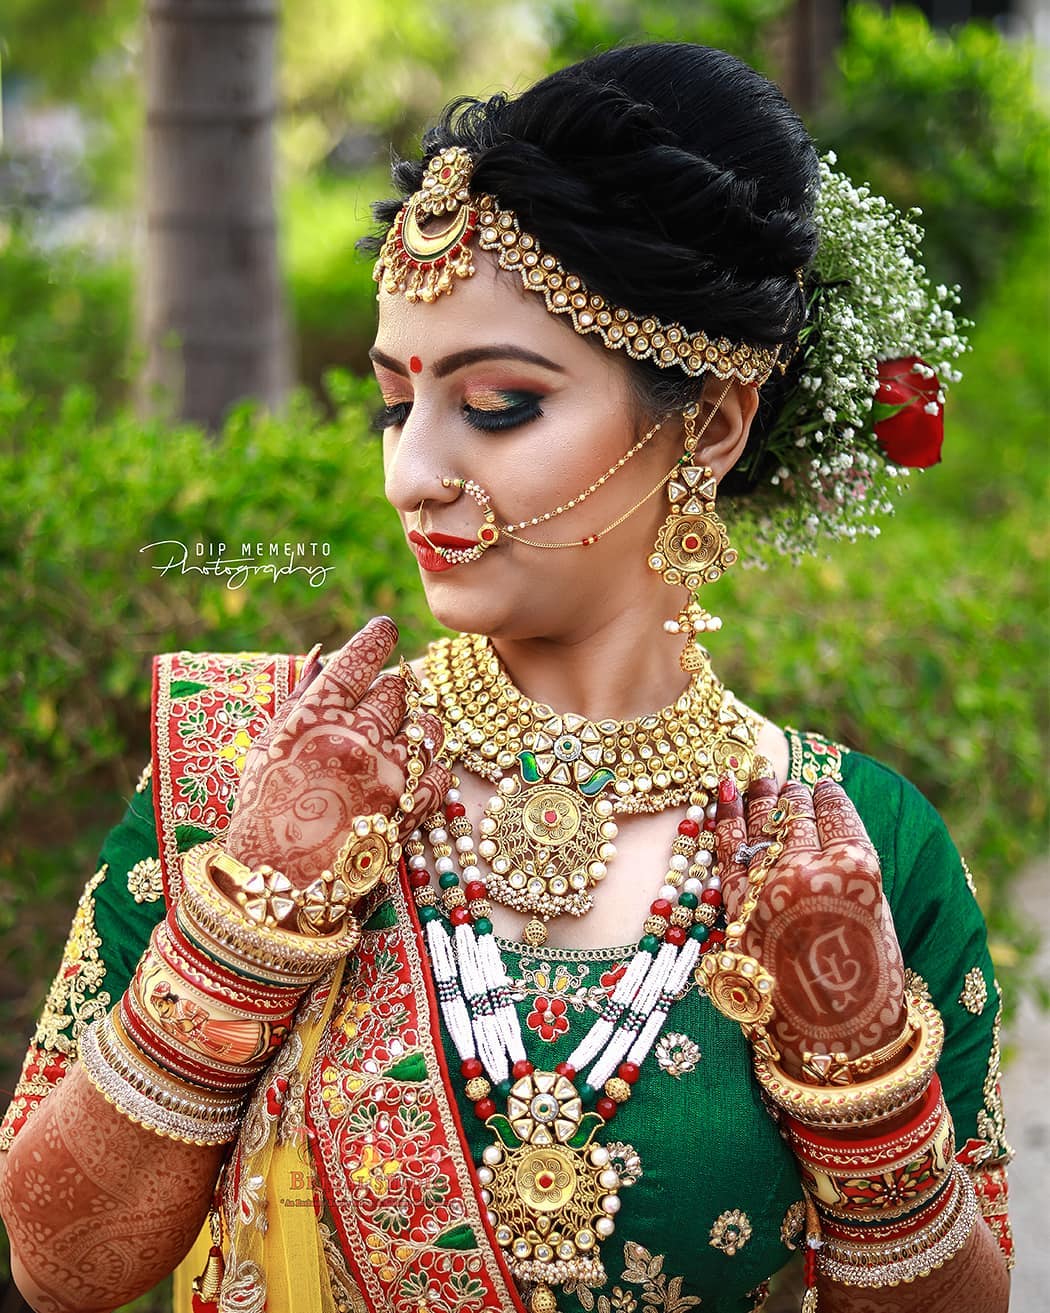 The Essence.
.
Bride shoot.. .
.
MUA : @dishabeautysaloonacademynikol

Shoot by : @dip_memento_photography
.
.
#portraits #dslrofficial #indianphotographers 
#portraitsindia #canon #colorsofindia
#photosofindia 
#fashion
#photographersofindia
#portraitsindia #fashionblogger #dipmementophotography
#makeupartist #photography #portraitvision #portraitmood #indianportraits #colorsofindia #portraitphotography #ahmedabad #indianpictures 
#portraitmood #portraits_india #bokehphotography #bongportrait #bokehphotography #yesindia #9924227745 #dipmementophotography #dip_memento_photography